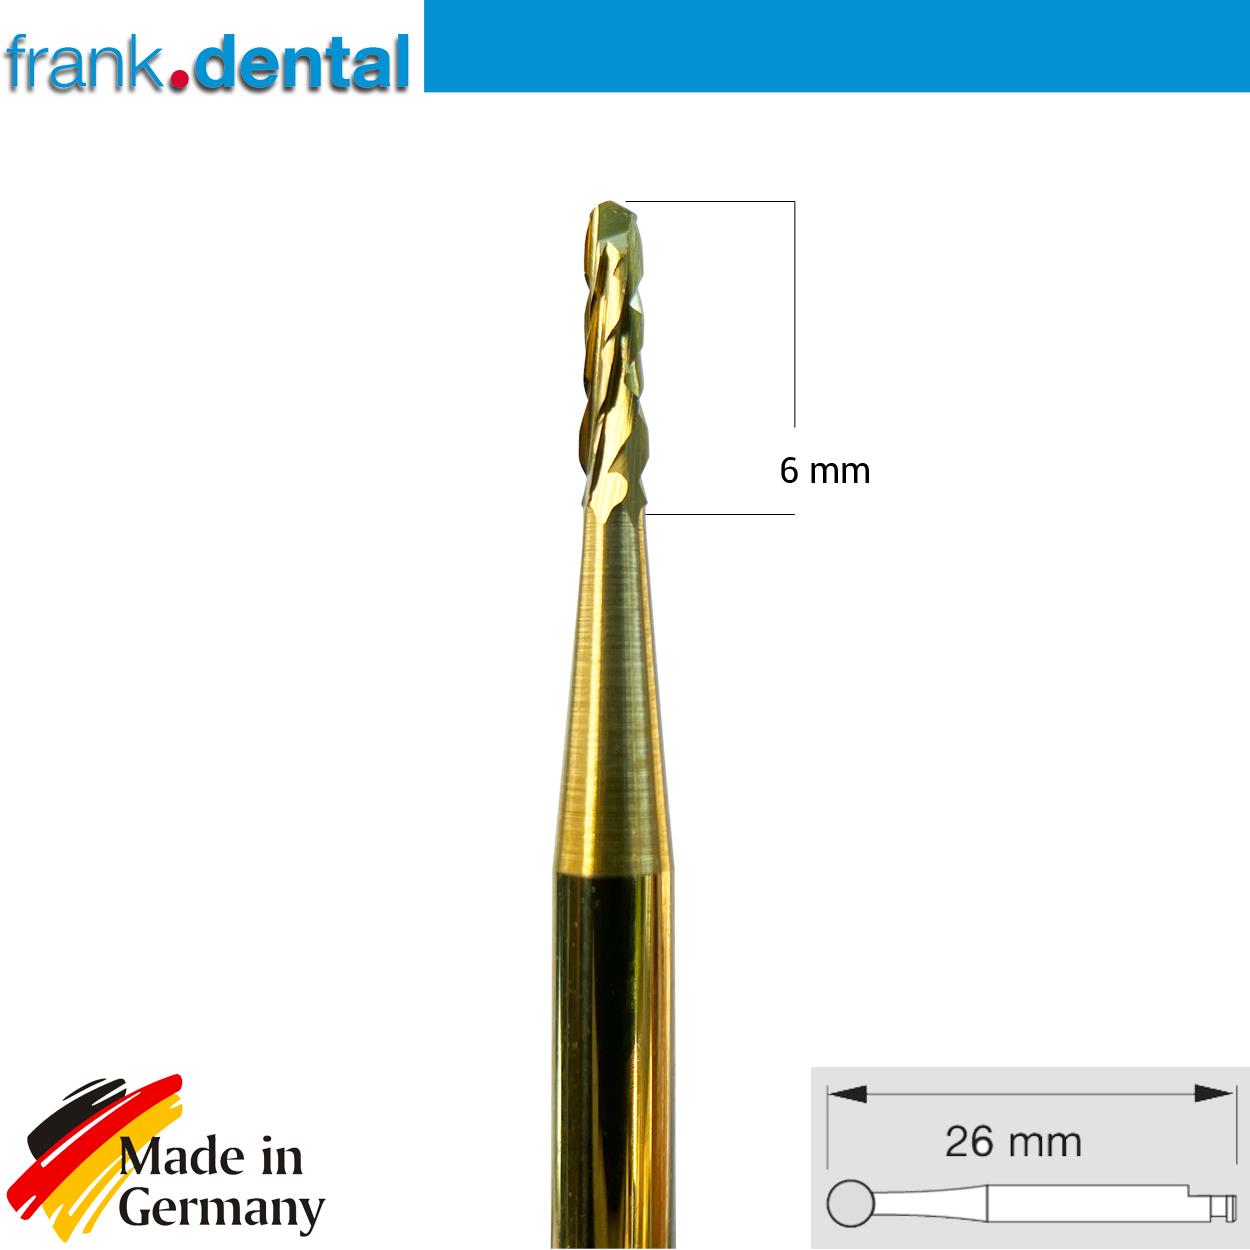 DentrealStore - Frank Dental Titanium Coated Carbide Lindemann Bone Cutter - 163A RAL